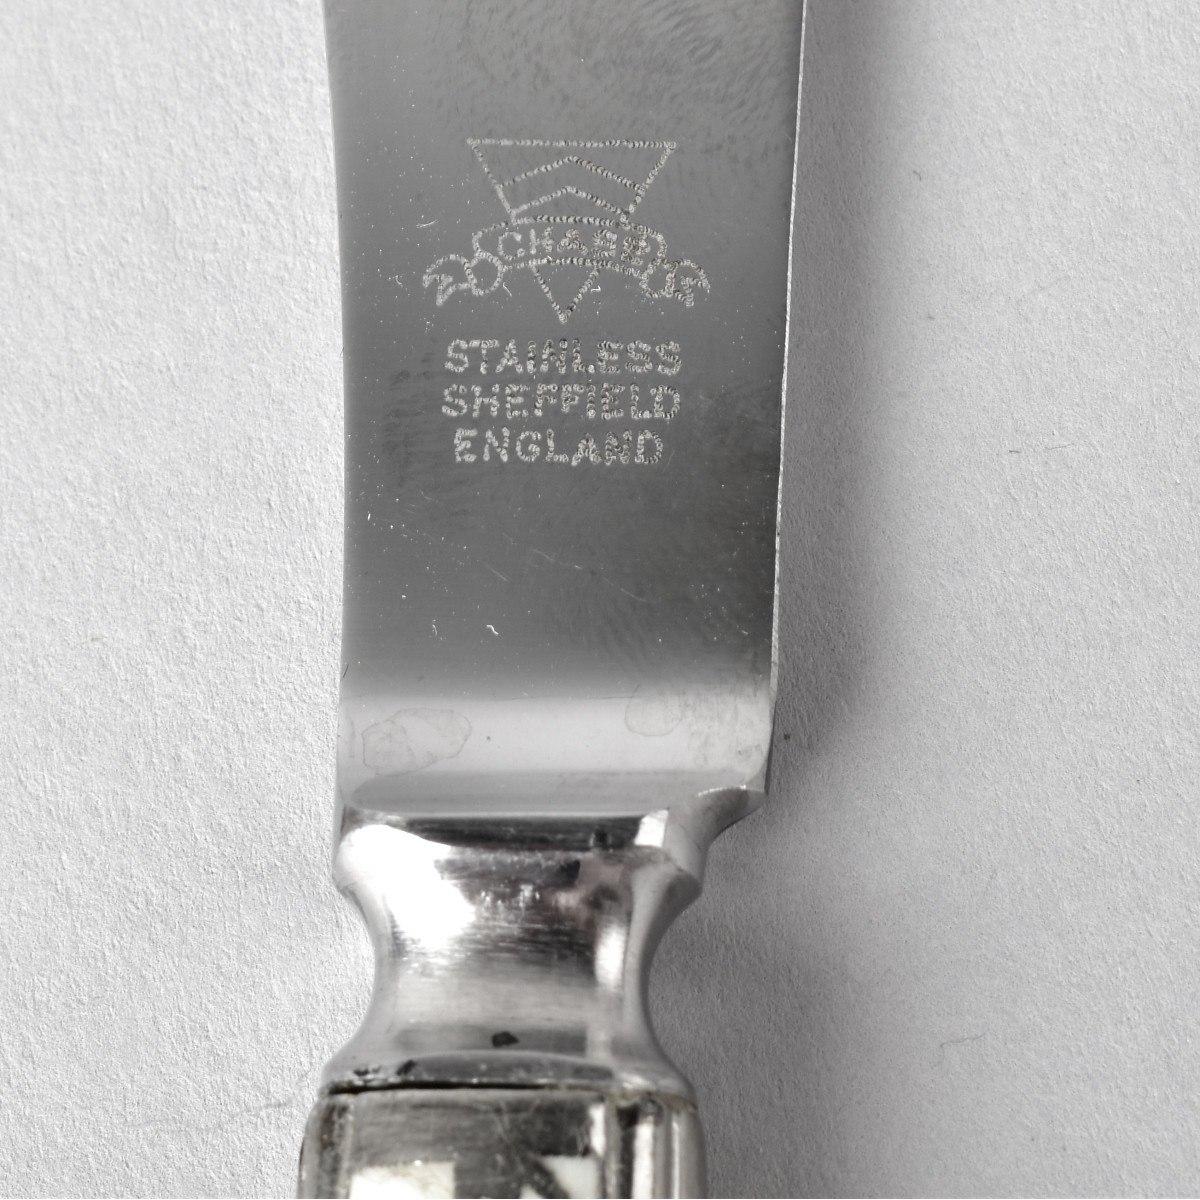 Vintage Sheffield Silver Overlaid Handled Knives